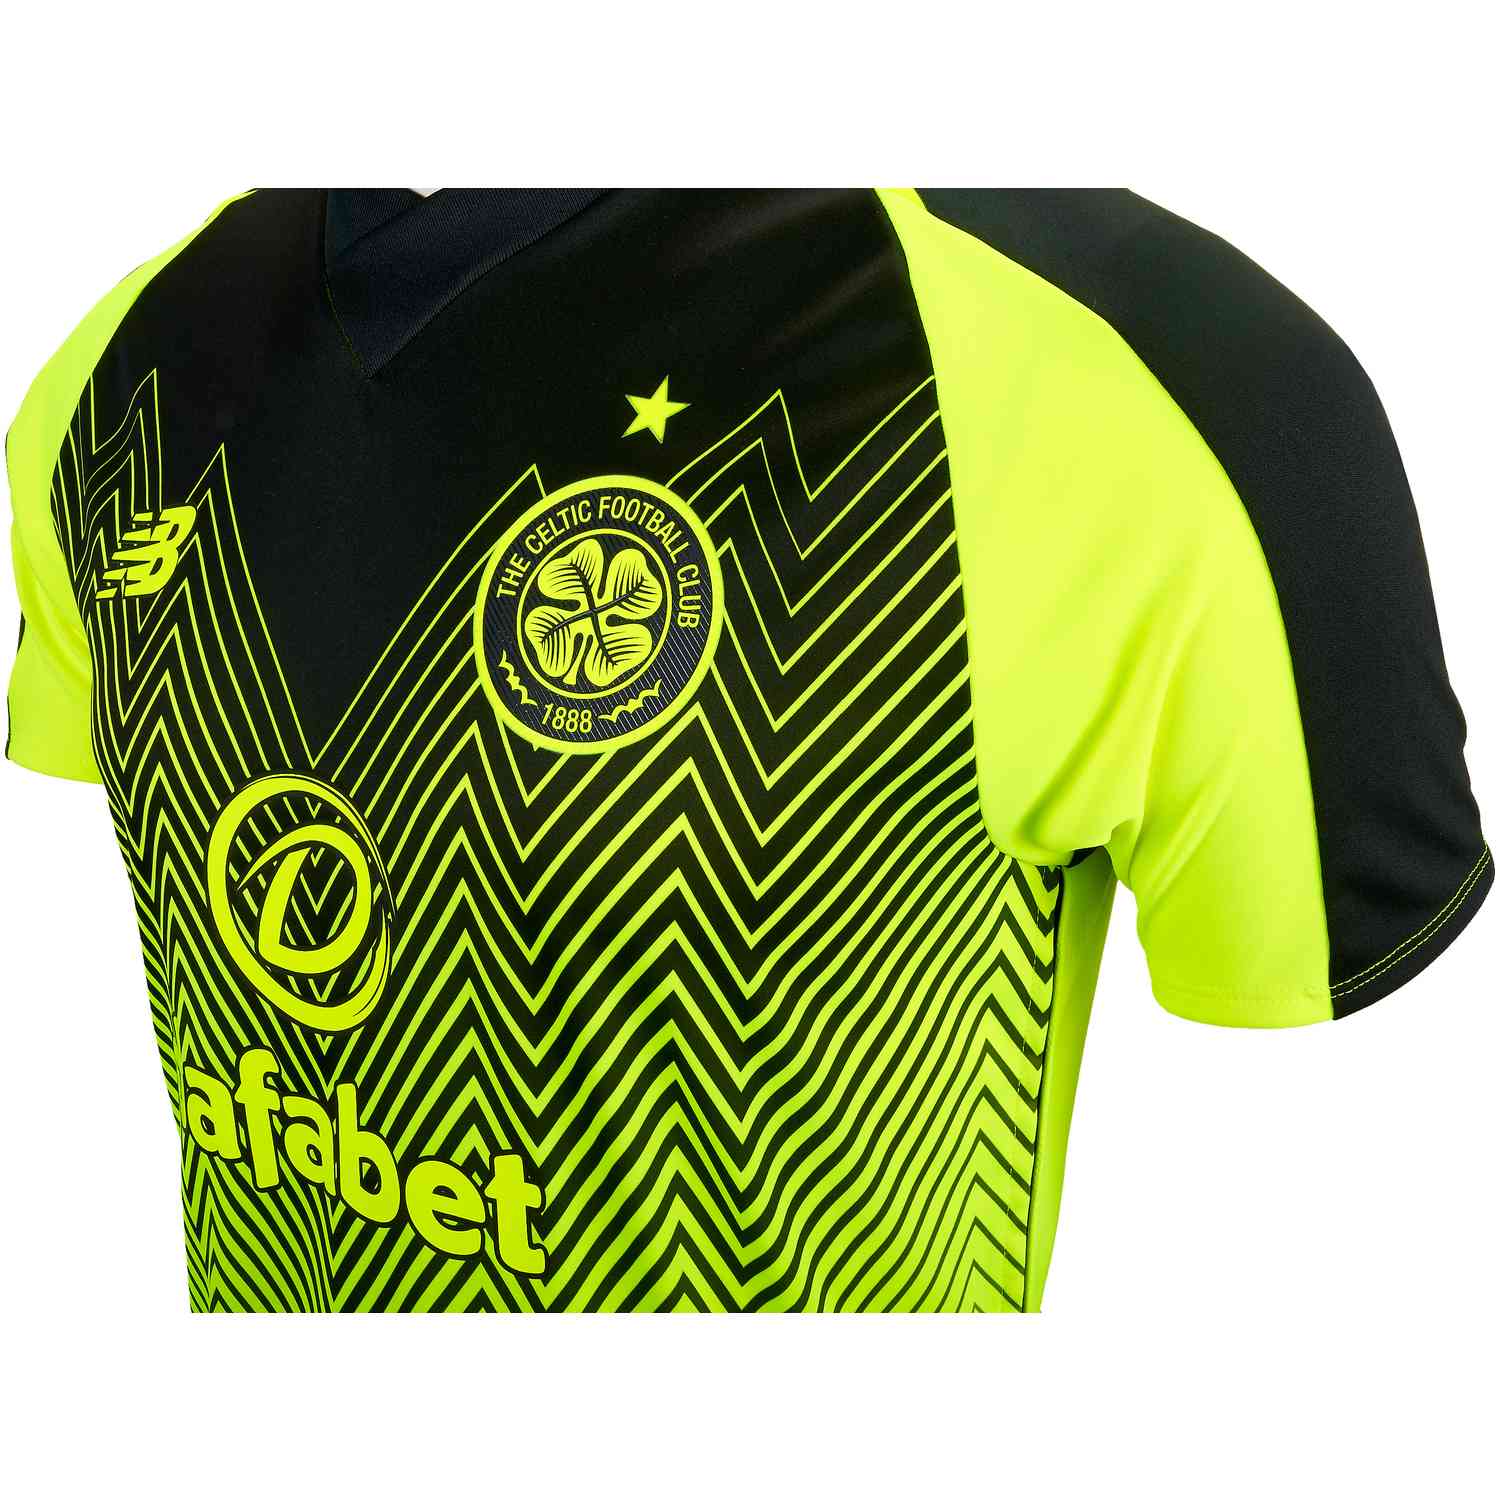 Celtic Third football shirt 2018 - 2019. Sponsored by dafabet